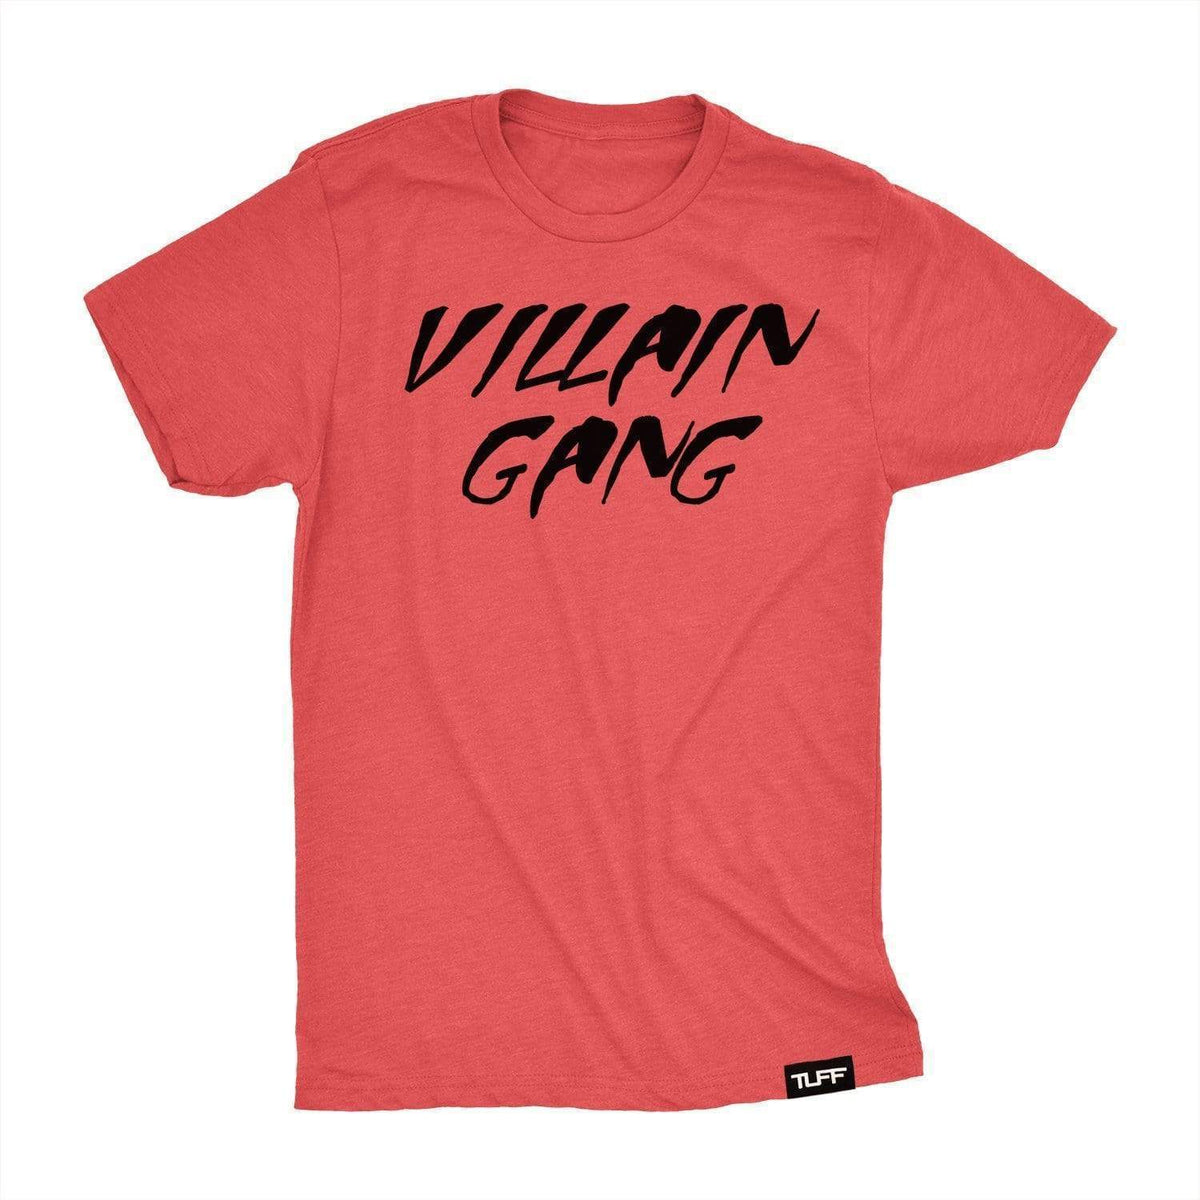 Villain Gang Tee S / Vintage Red TuffWraps.com